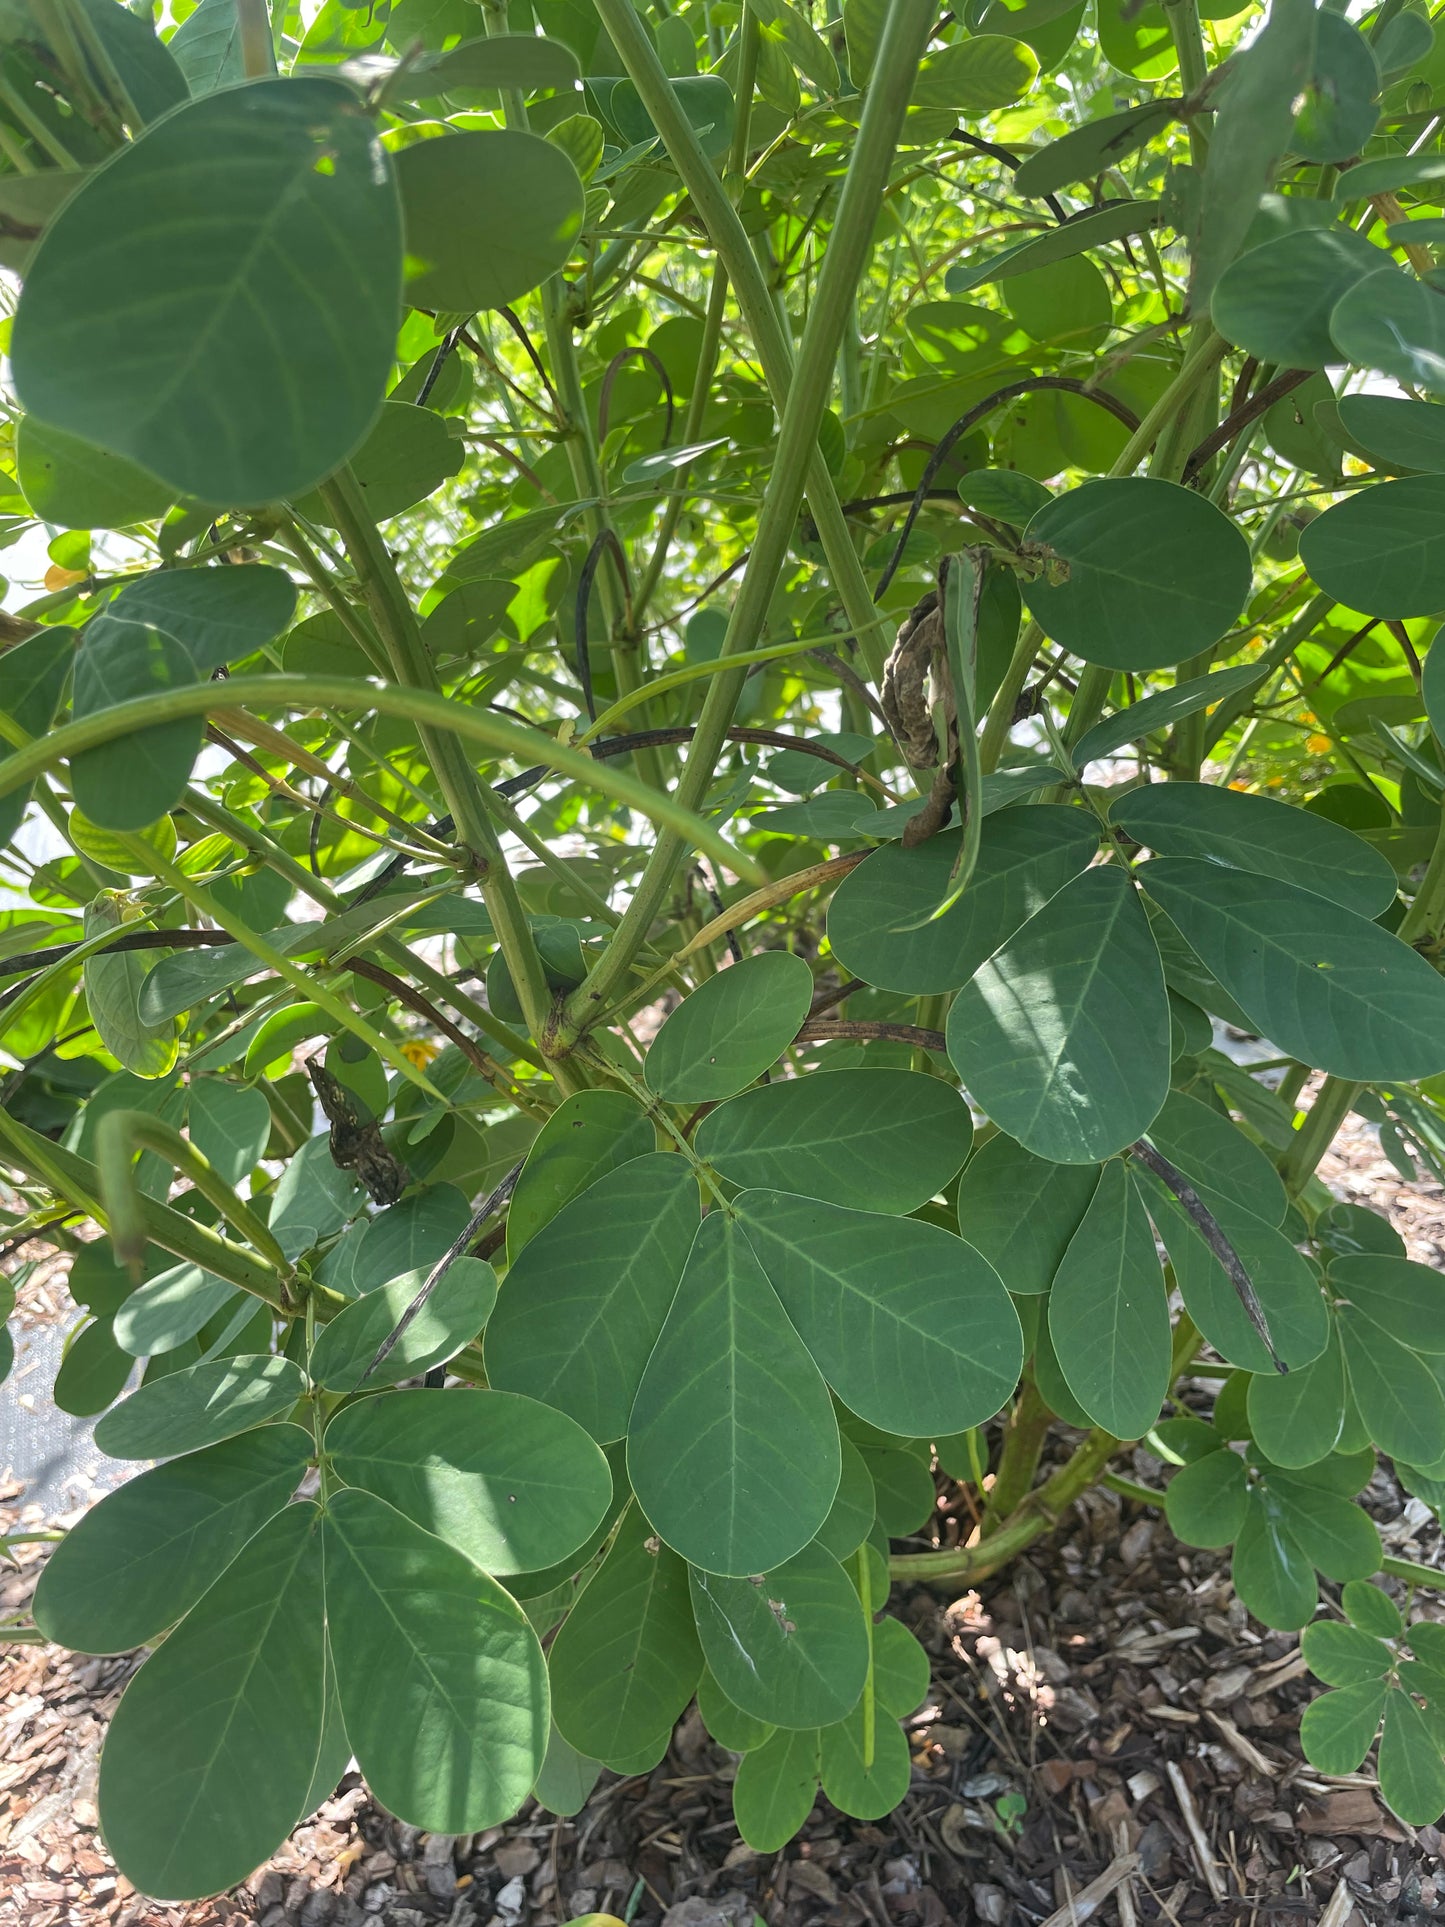 Senna obtusifolia " sicklepod" leaf is host plant for sulphur butterflies